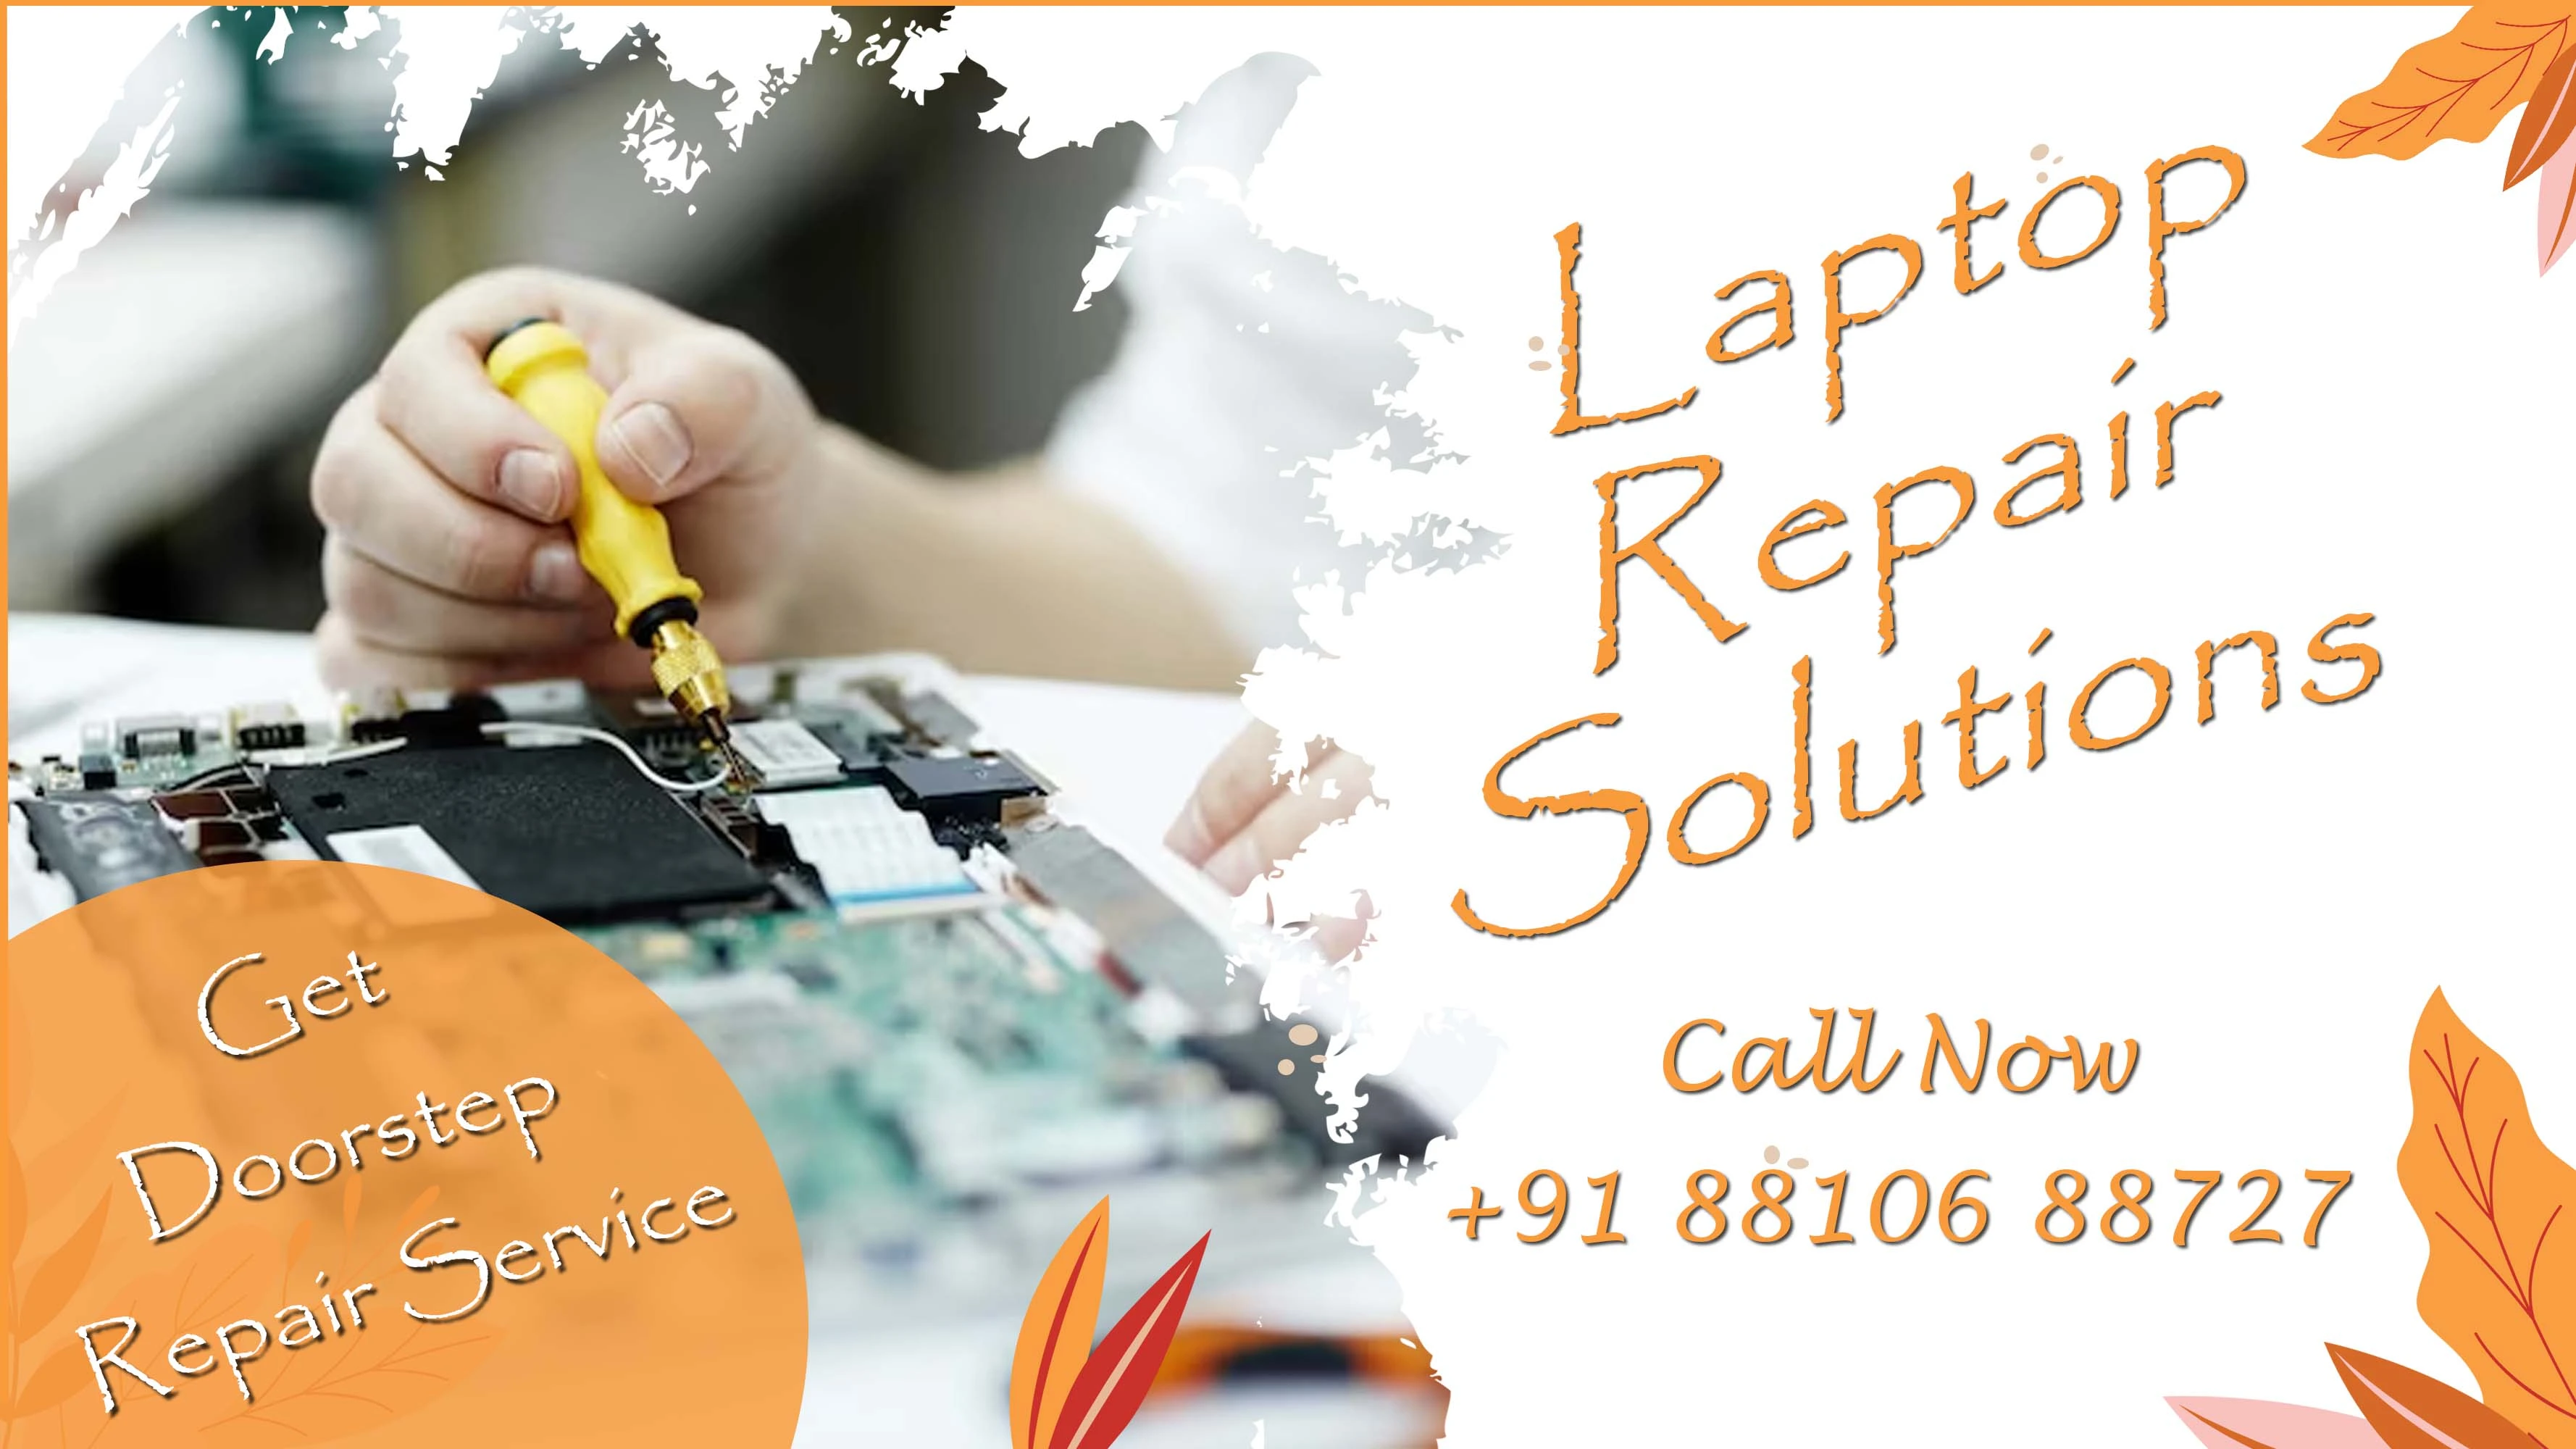 hp_laptop_service_center_gurgaon